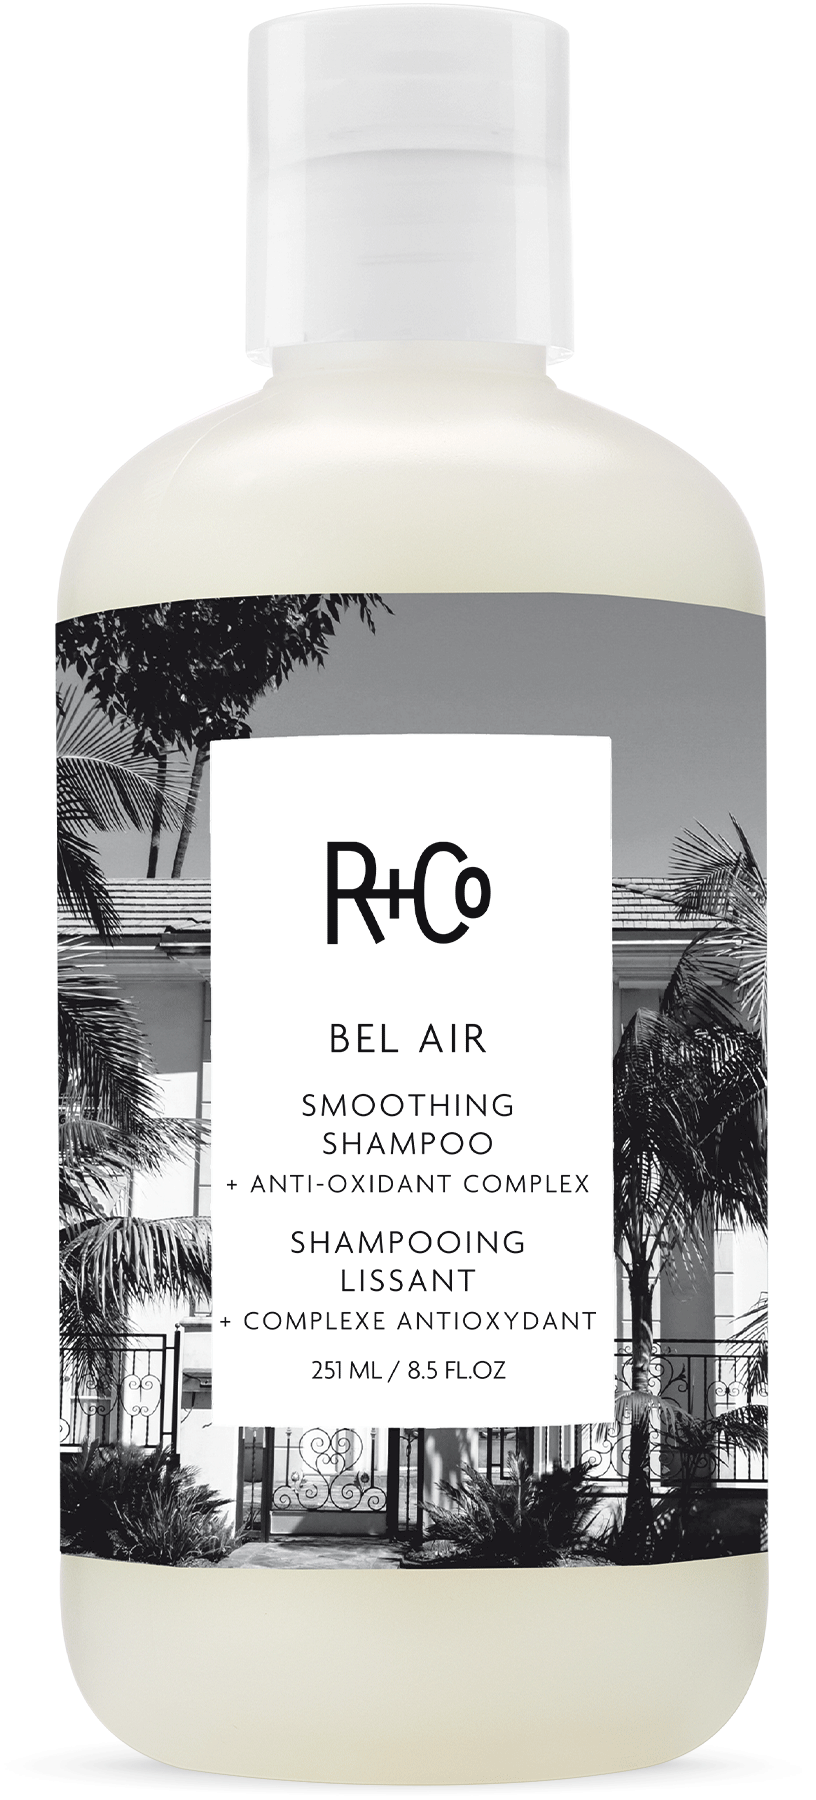 R+CO-Bel Air Smoothing Shampoo + Anti-Oxidant Complex